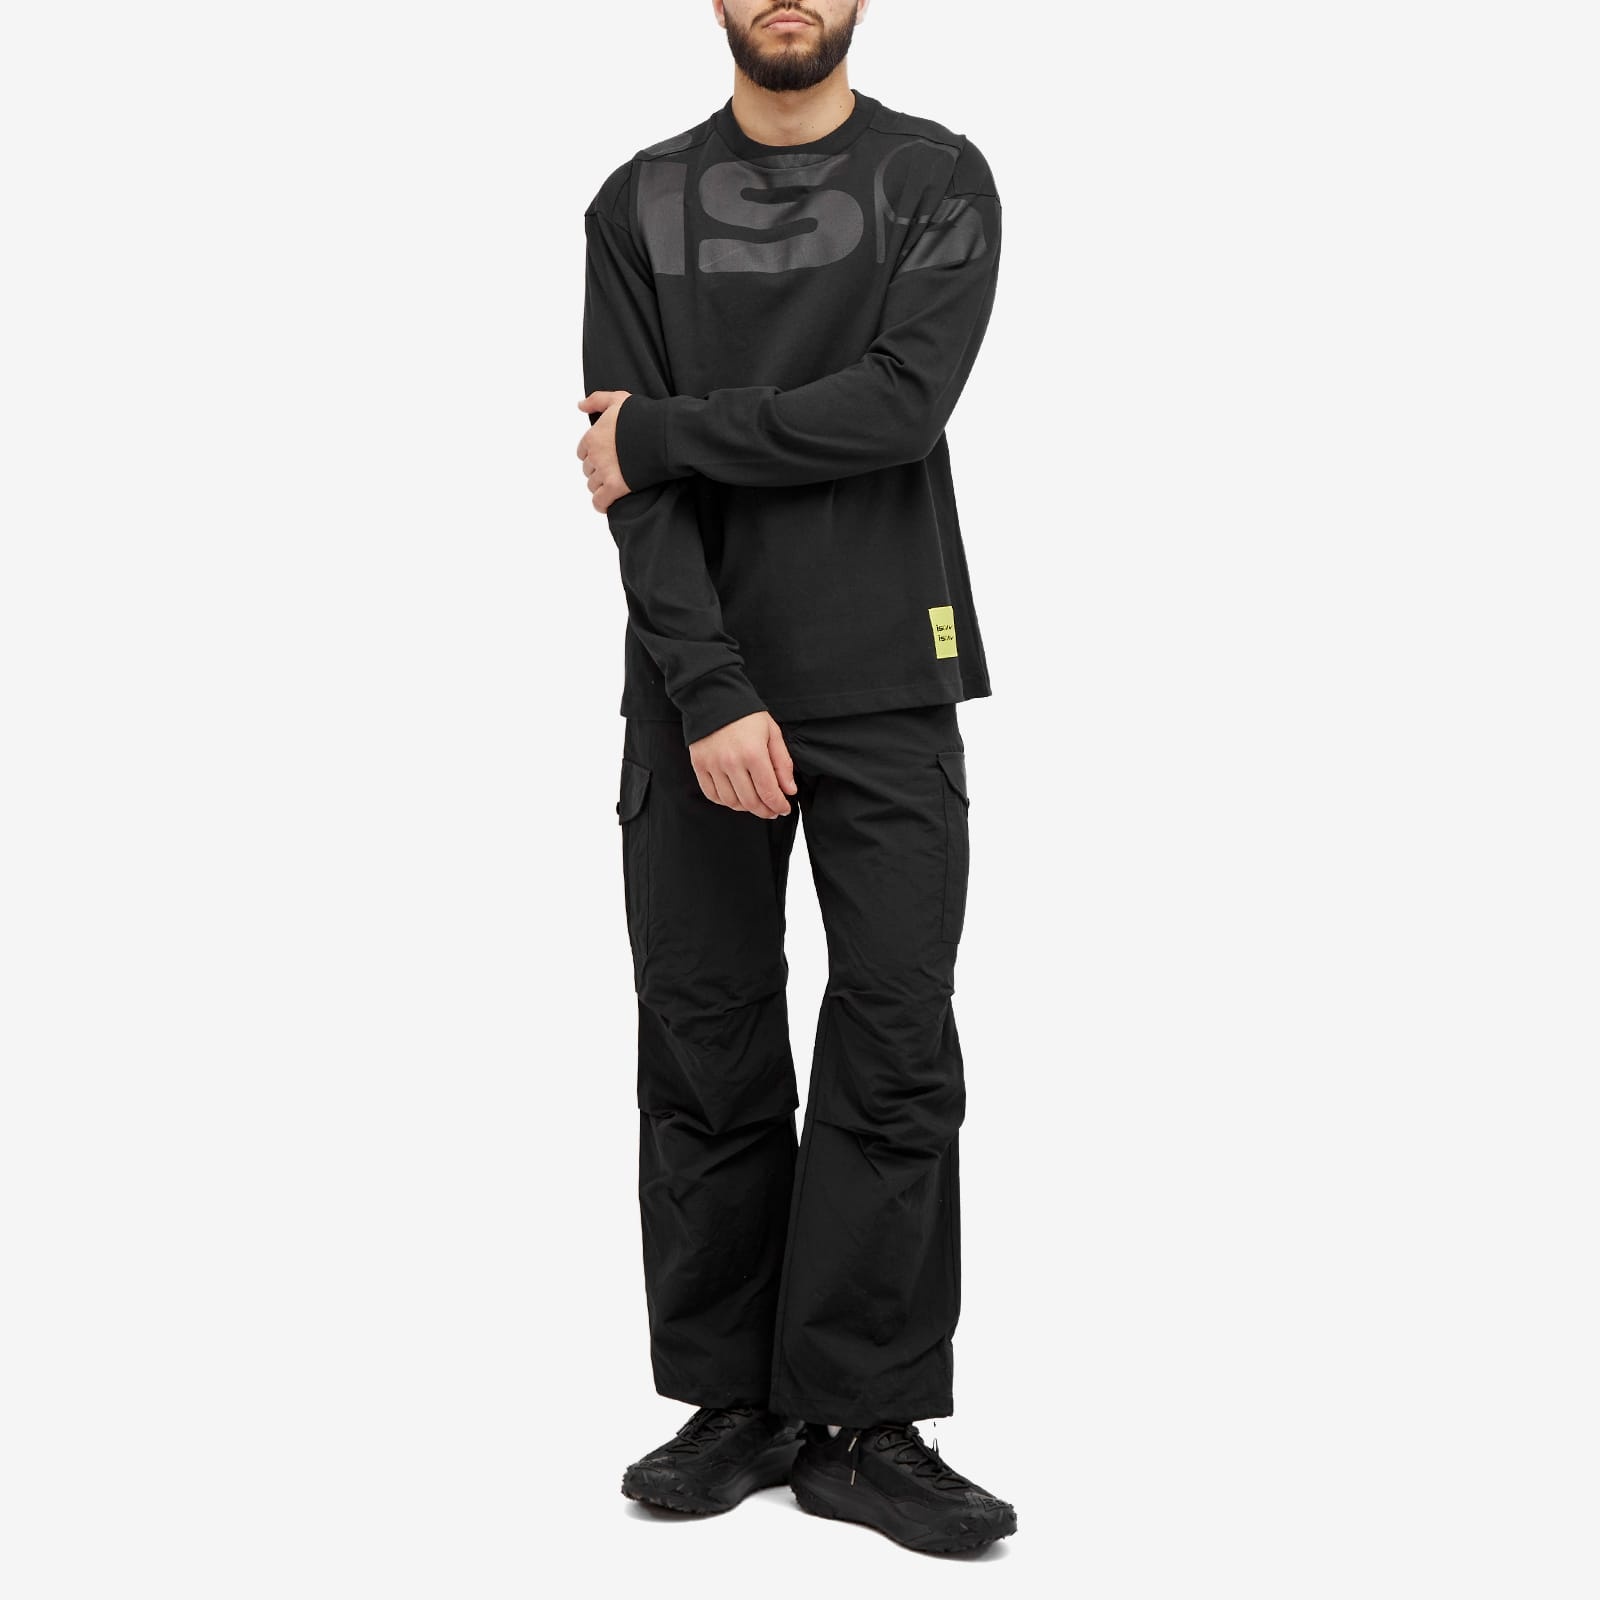 Nike ISPA Long Sleeve T-shirt - 5